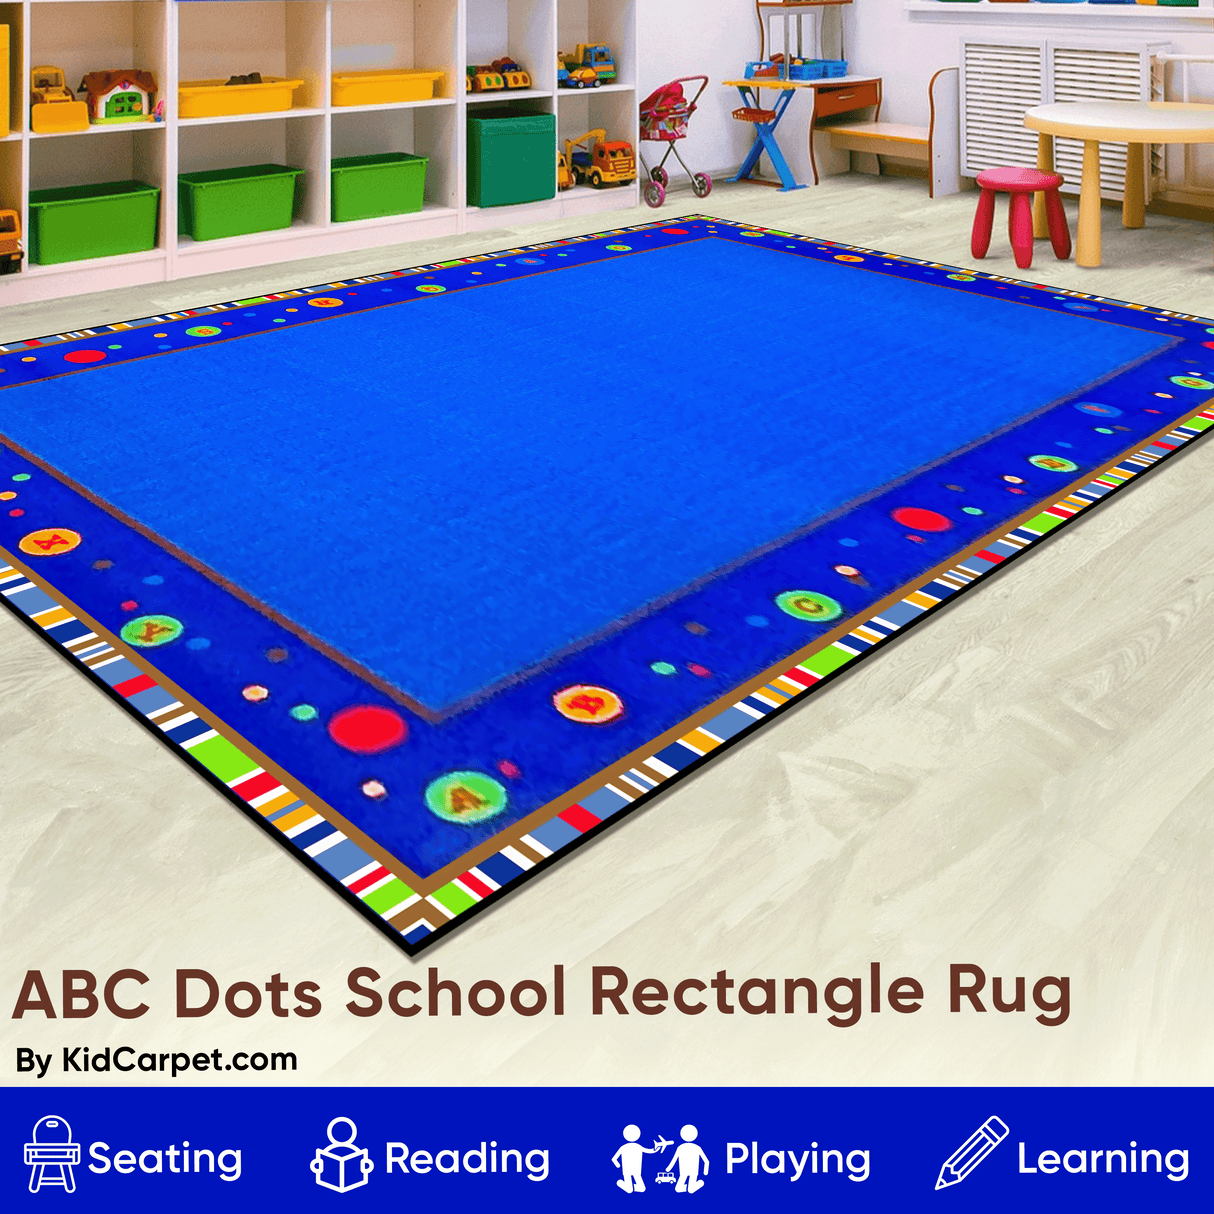 ABC Dots School Rug